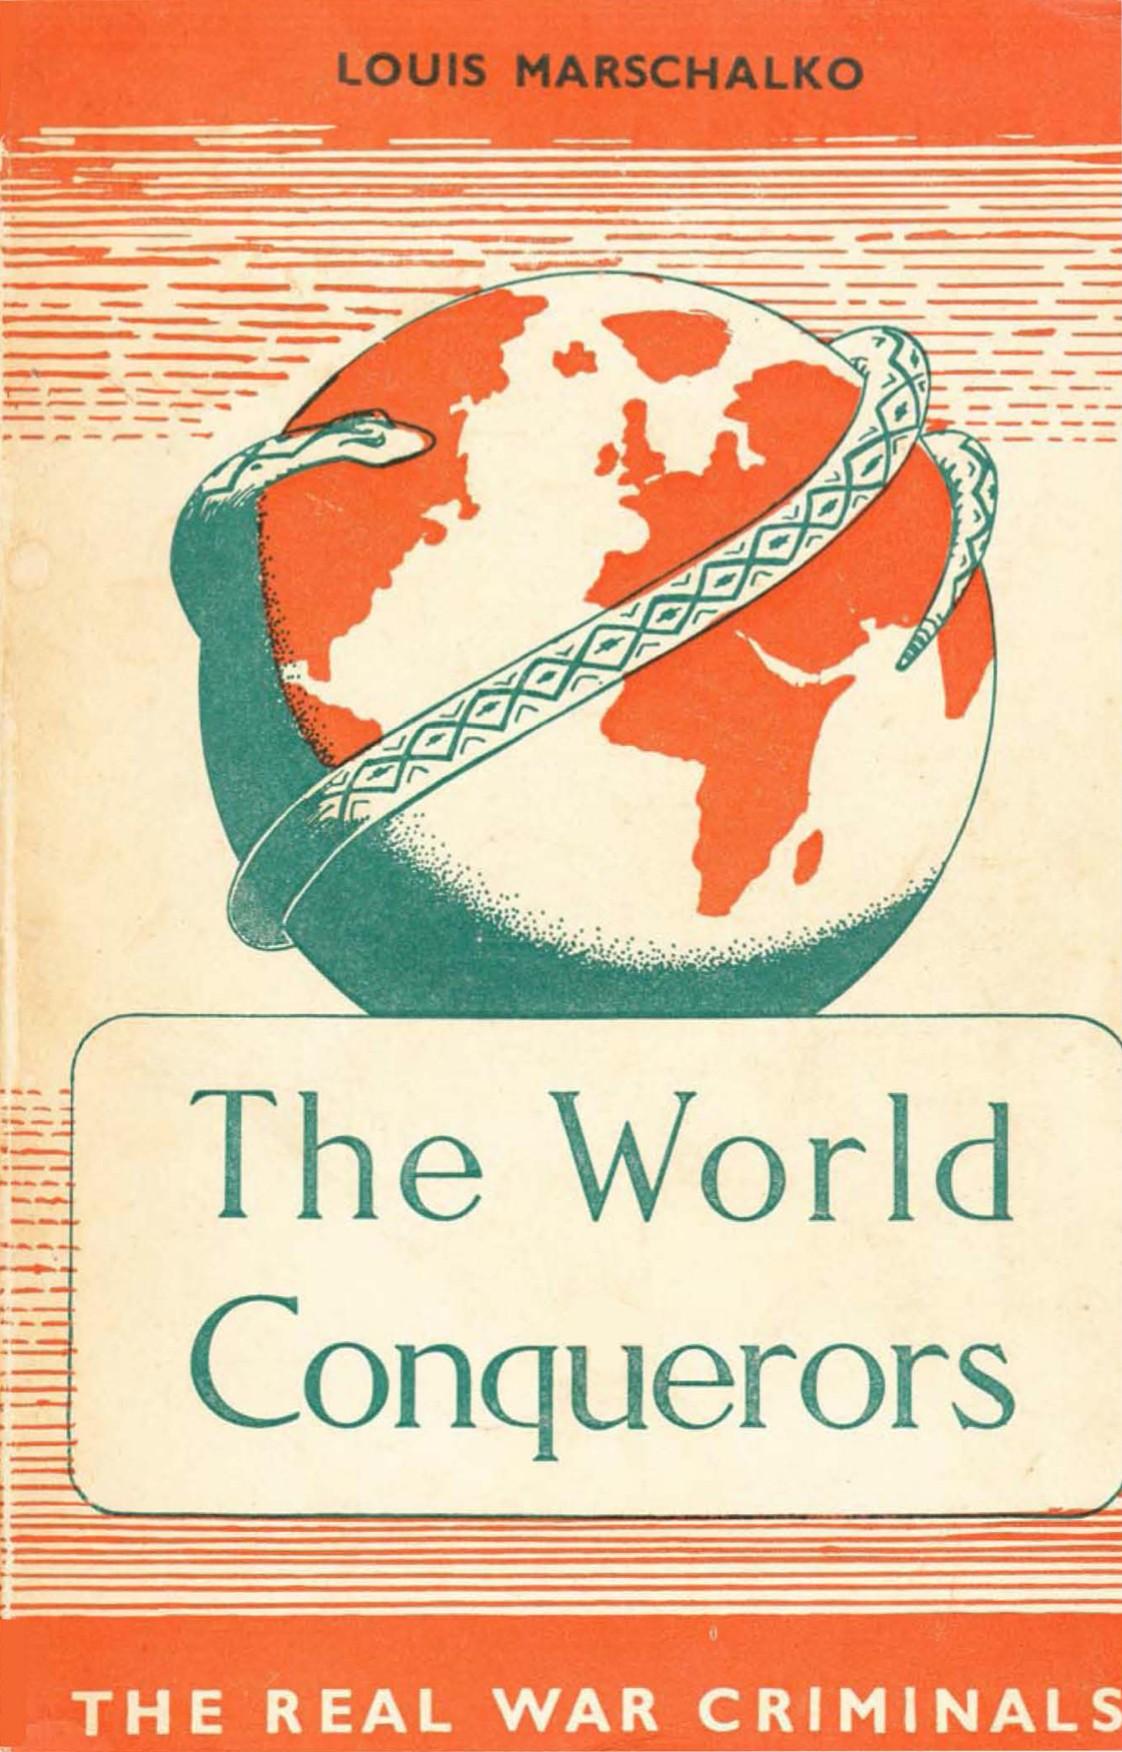 The World Conquerors (1958) by Louis Marschalko